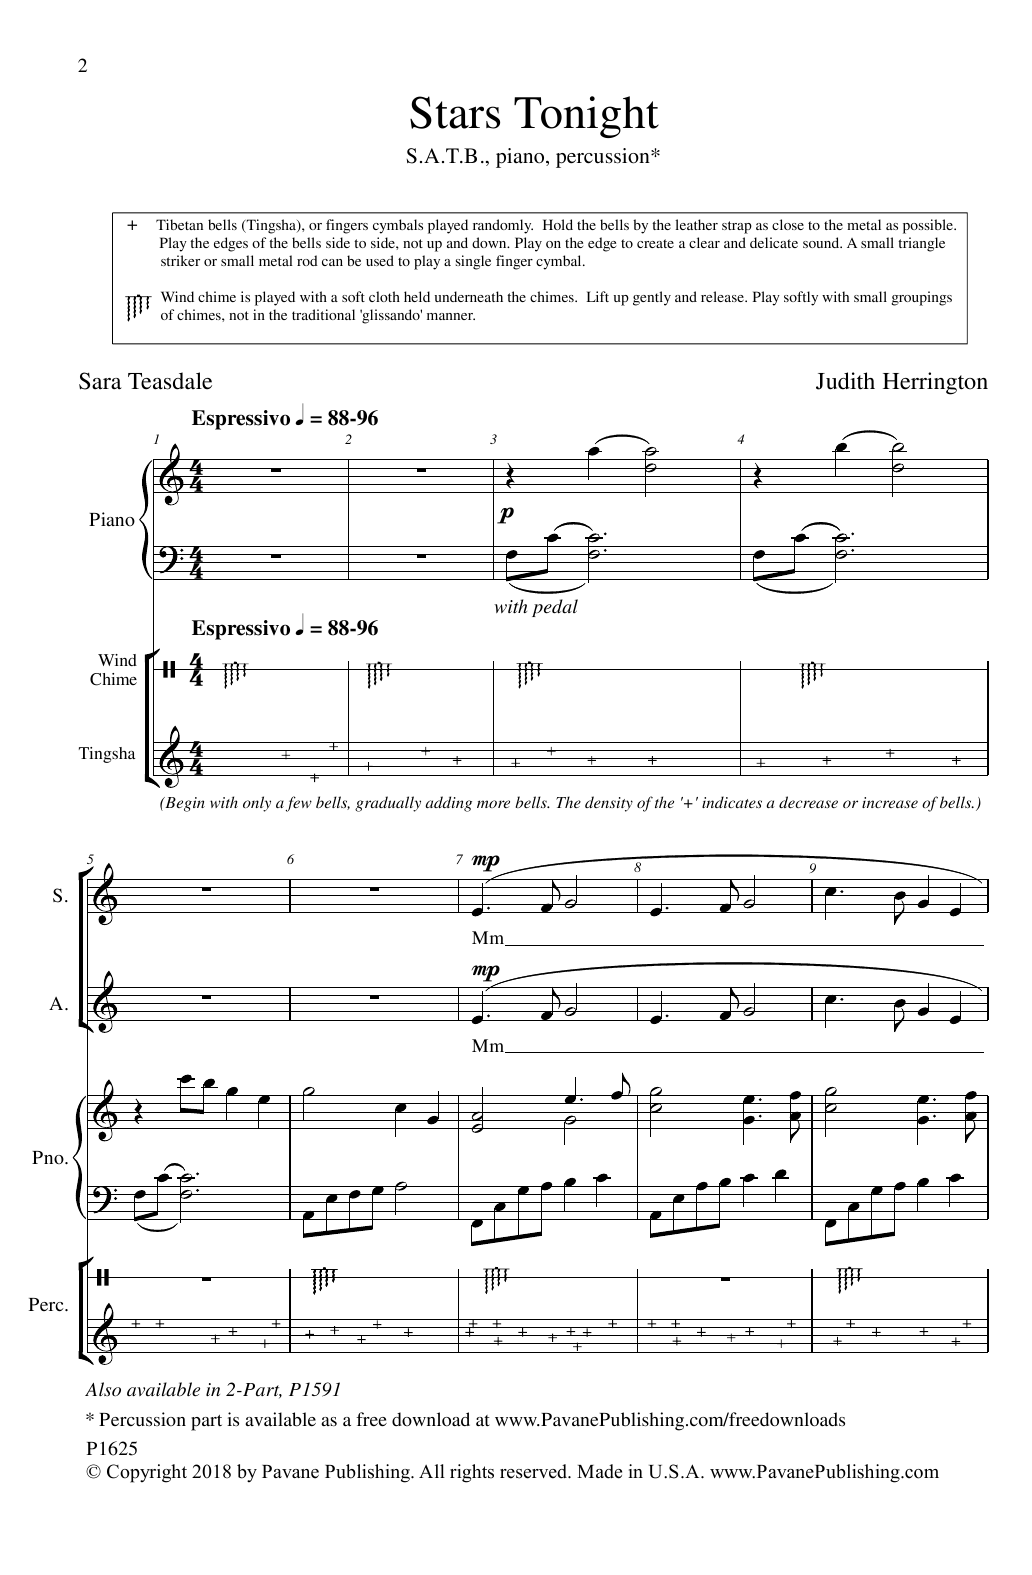 Judith Herrington Stars Tonight Sheet Music Notes & Chords for SATB Choir - Download or Print PDF